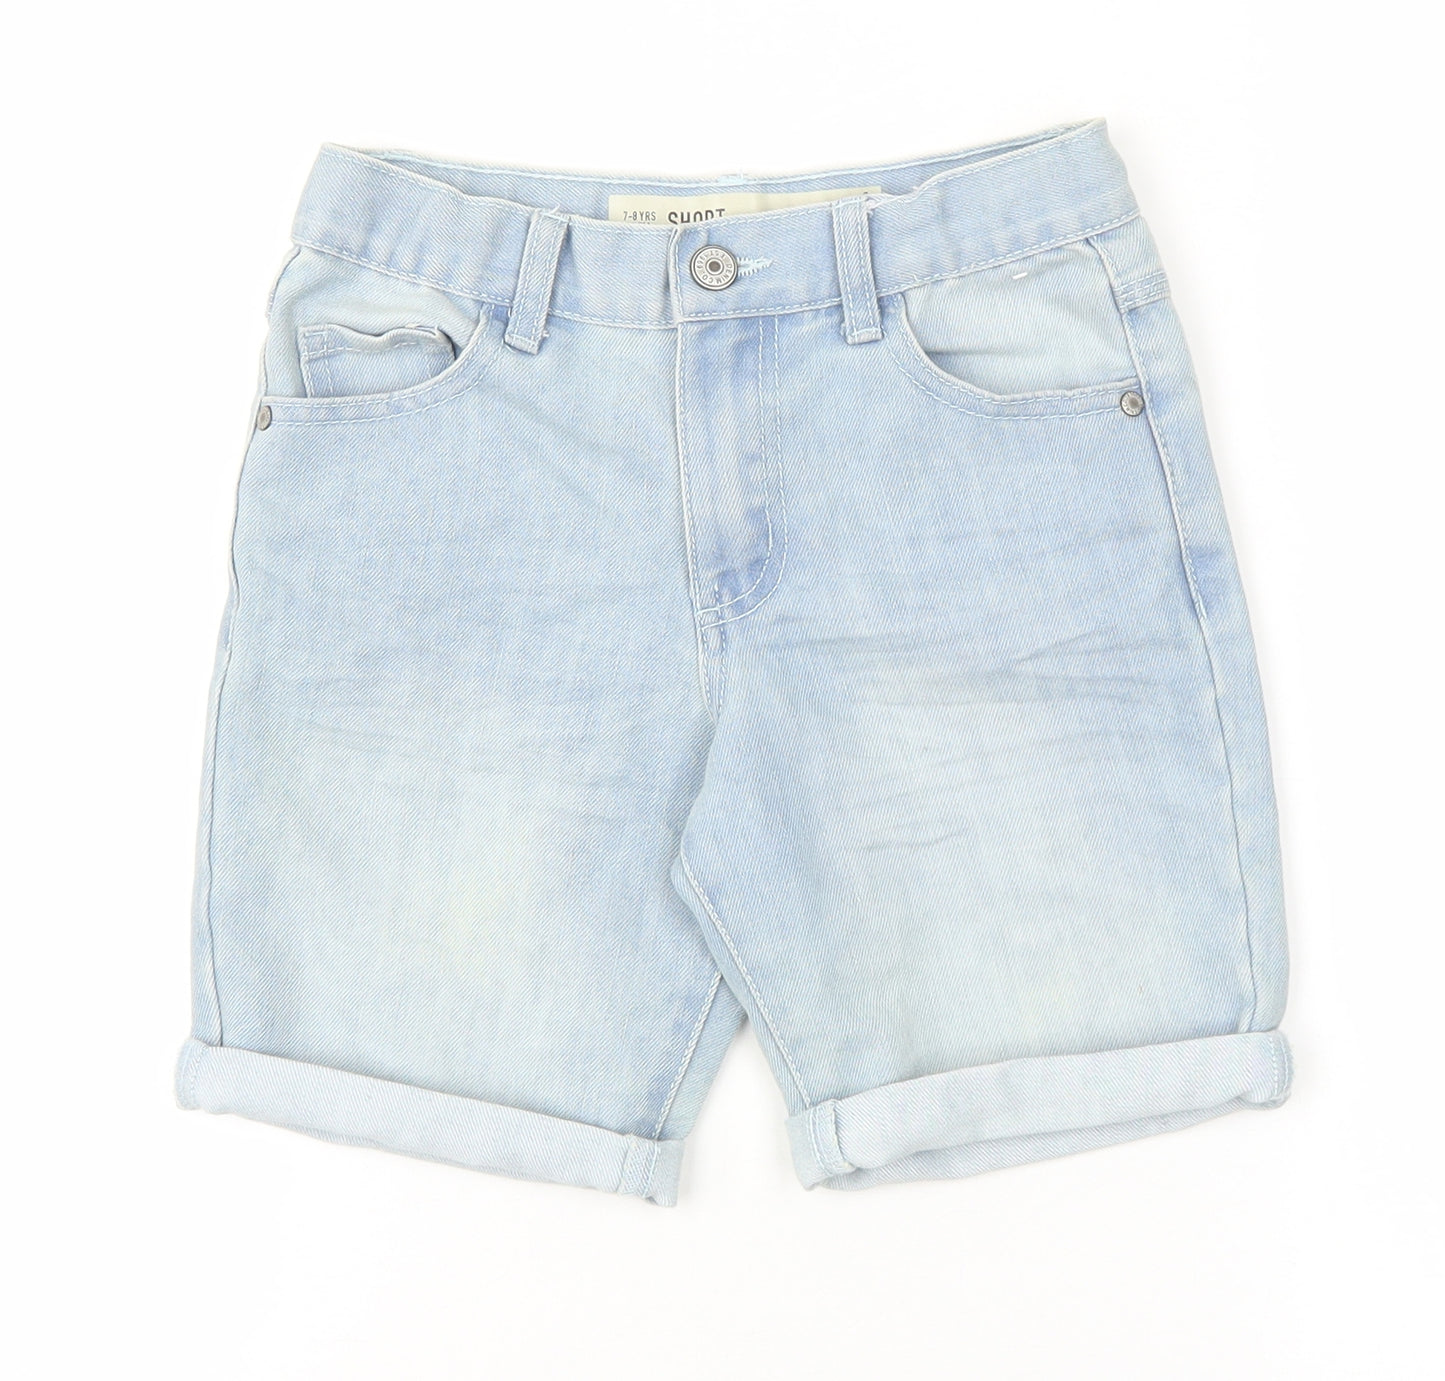 Primark Boys Blue Cotton Bermuda Shorts Size 7-8 Years Regular Zip - Button Front